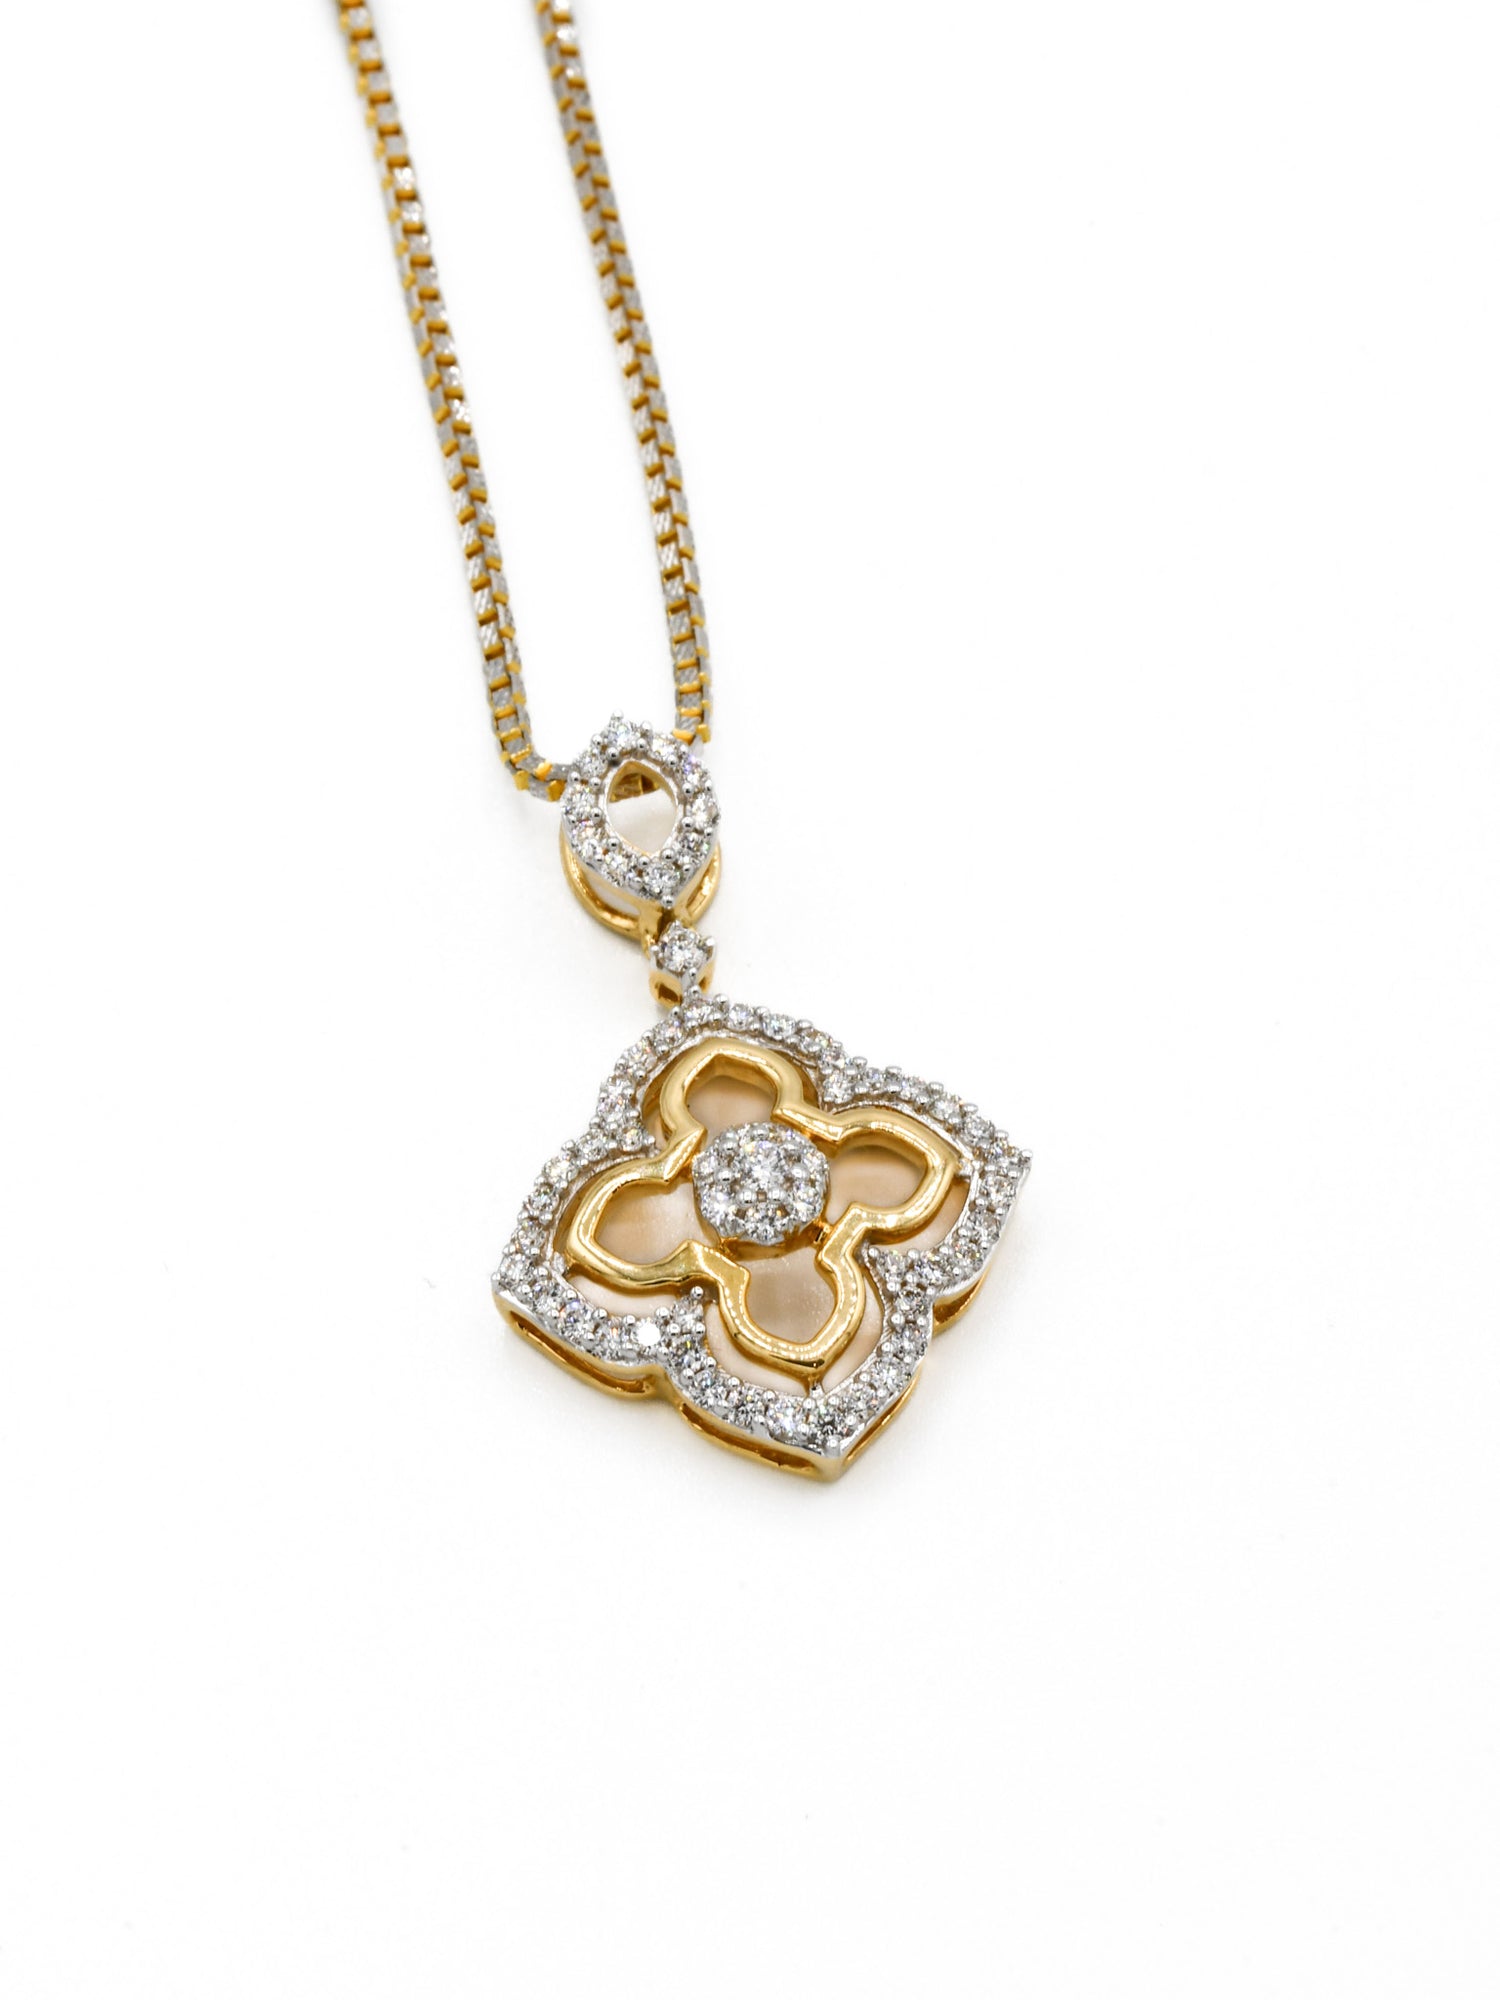 18ct Gold Diamond Pendant - 0.46 cts - Roop Darshan